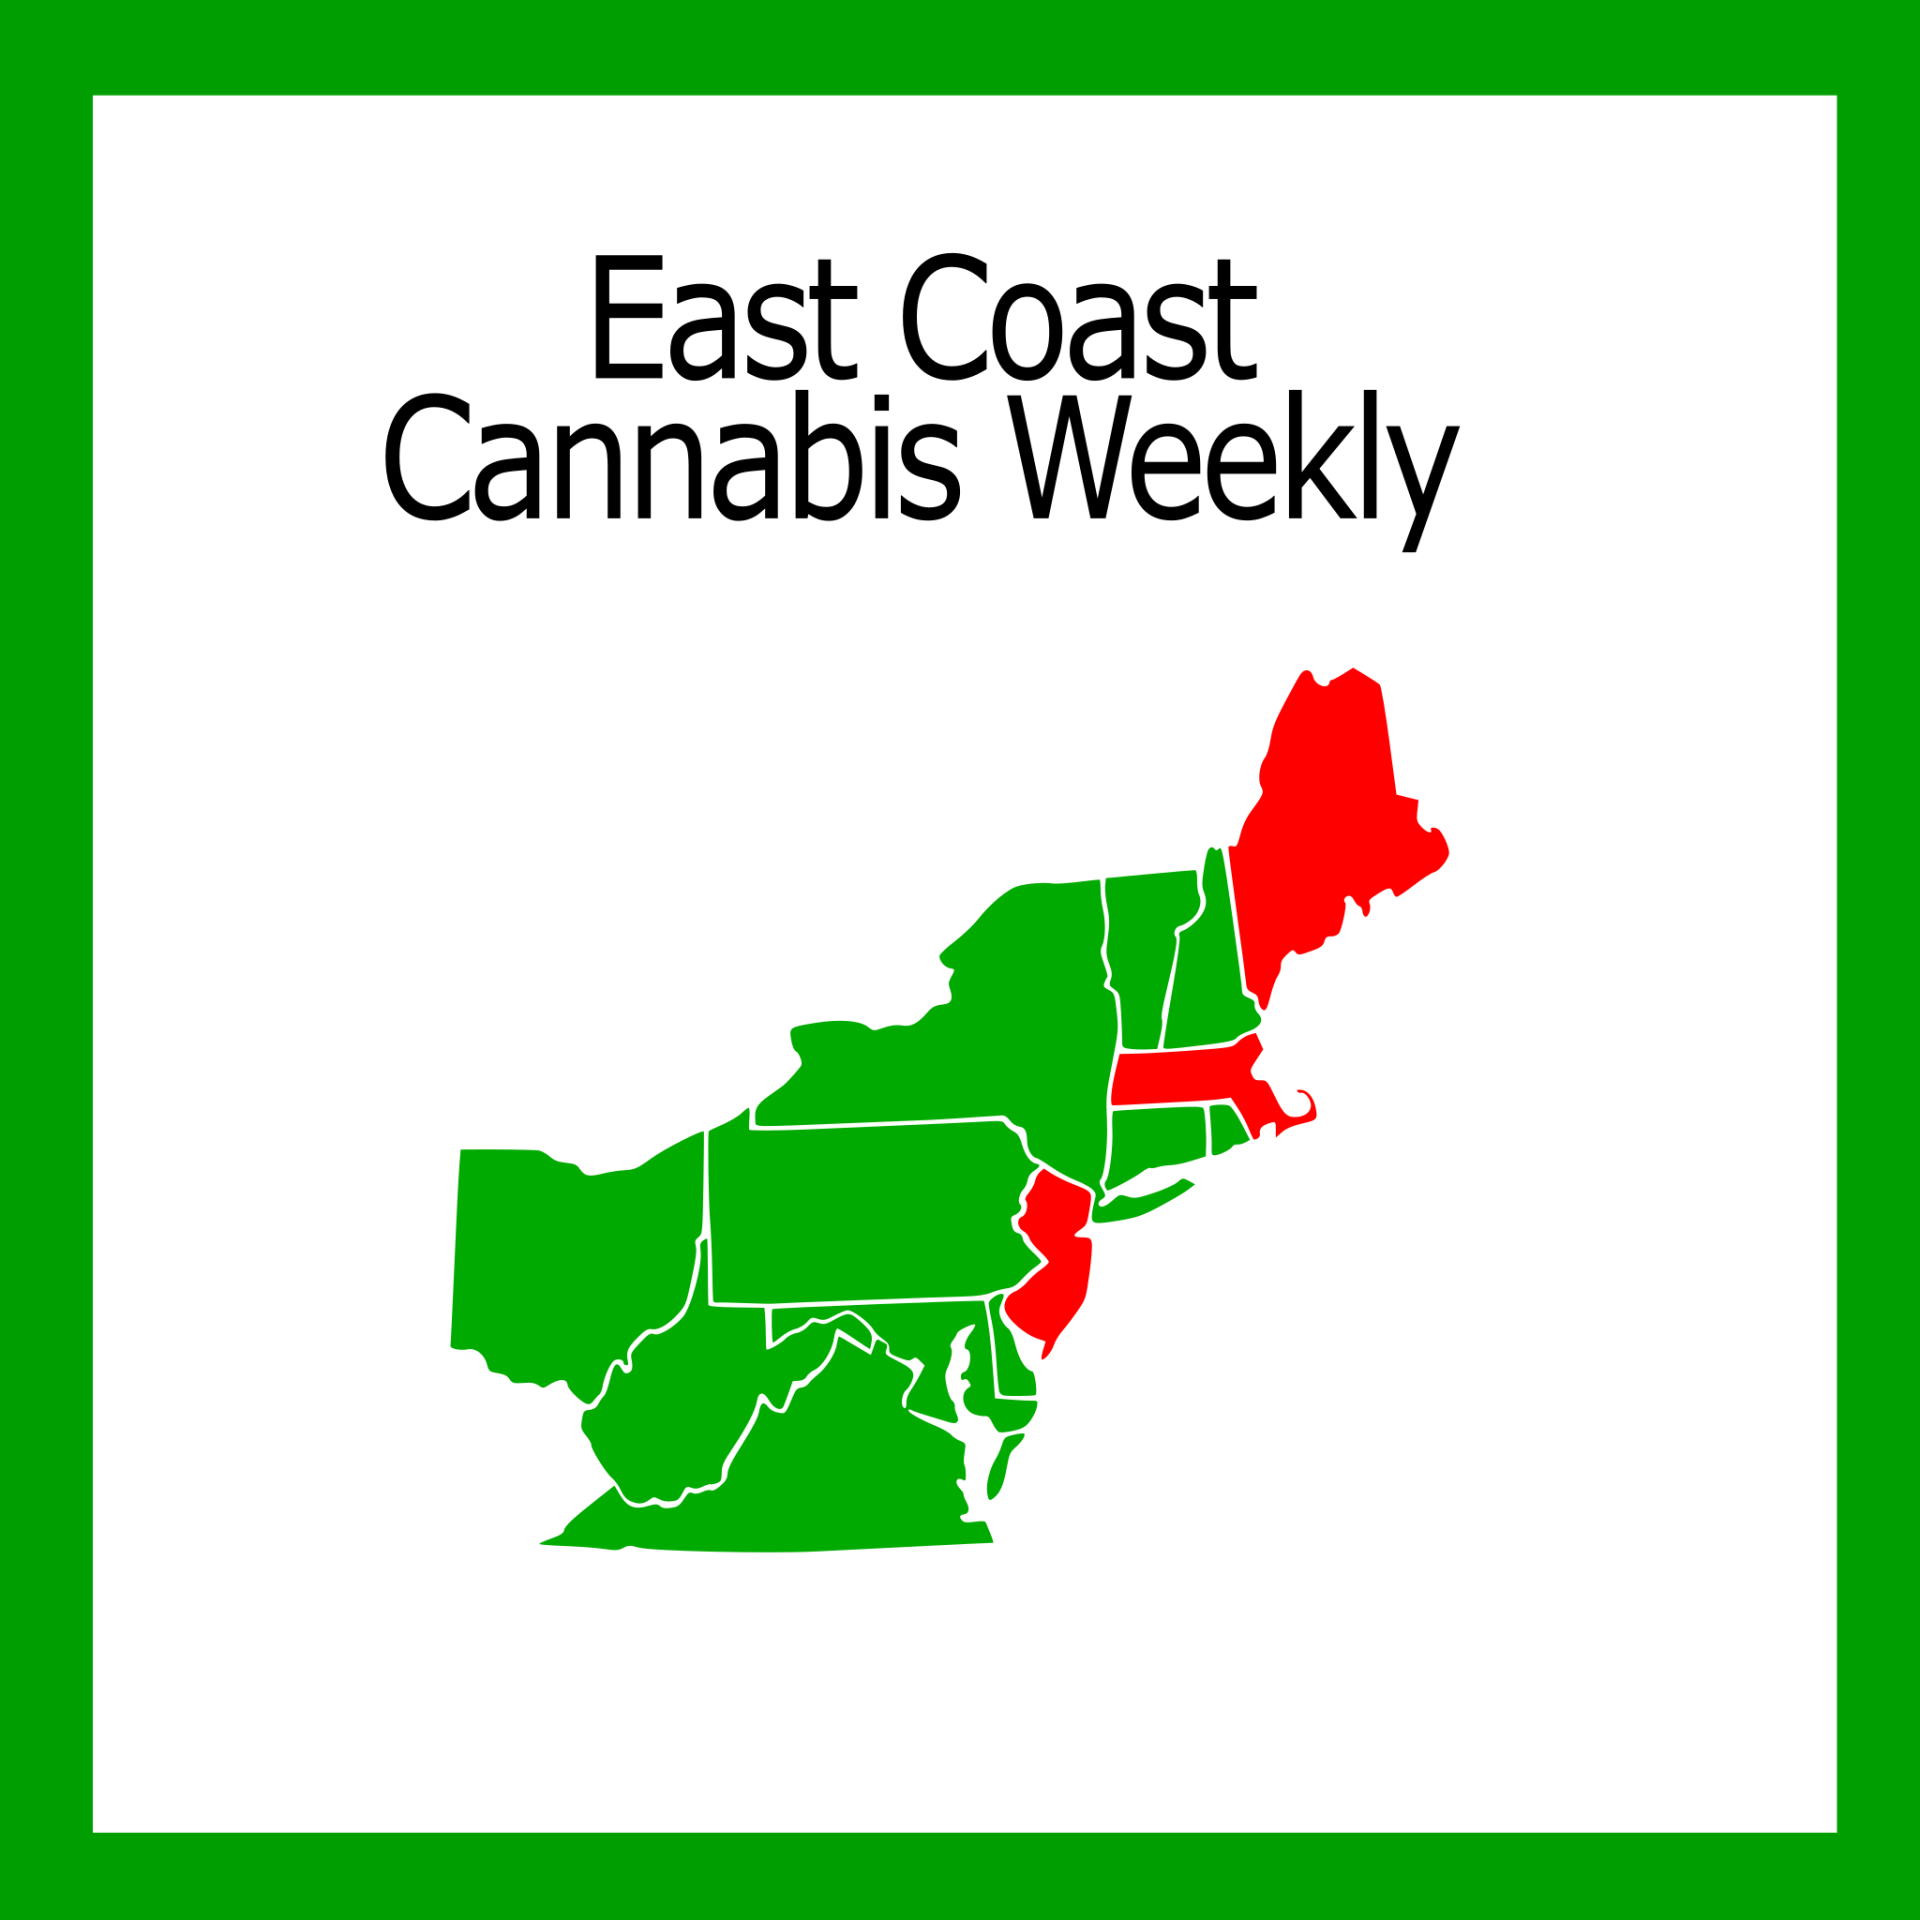 news about cannabis on the east coast